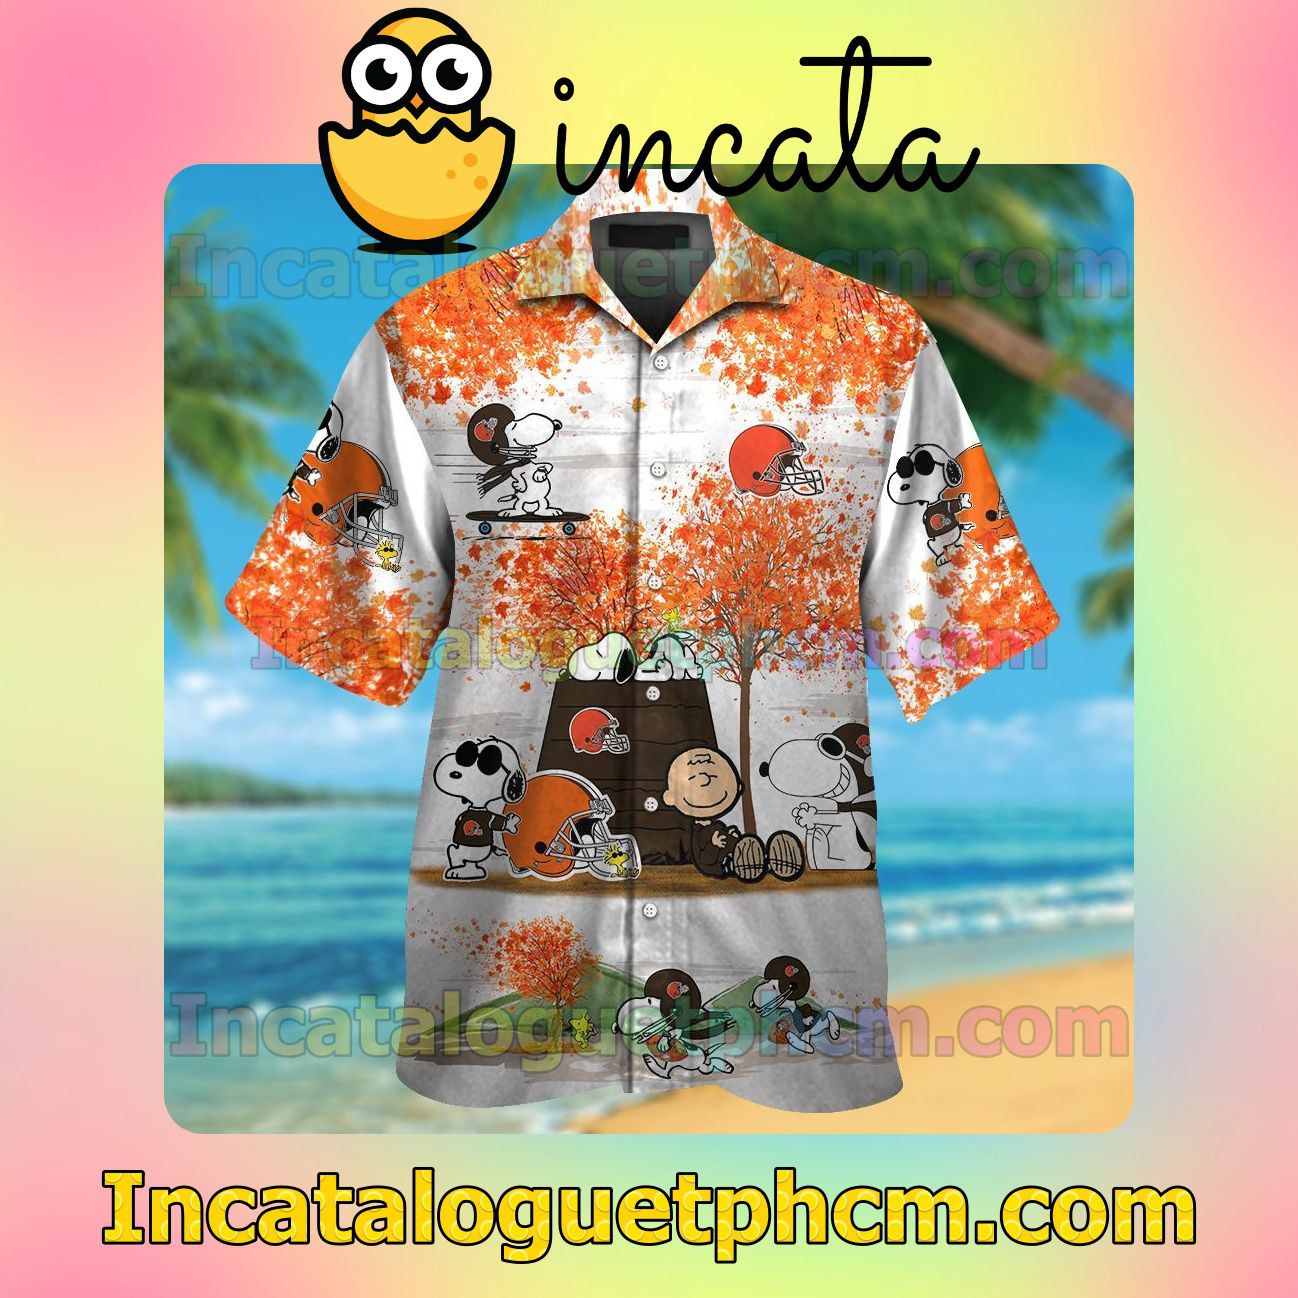 Cleveland Browns Snoopy Autumn Beach Vacation Shirt, Swim Shorts